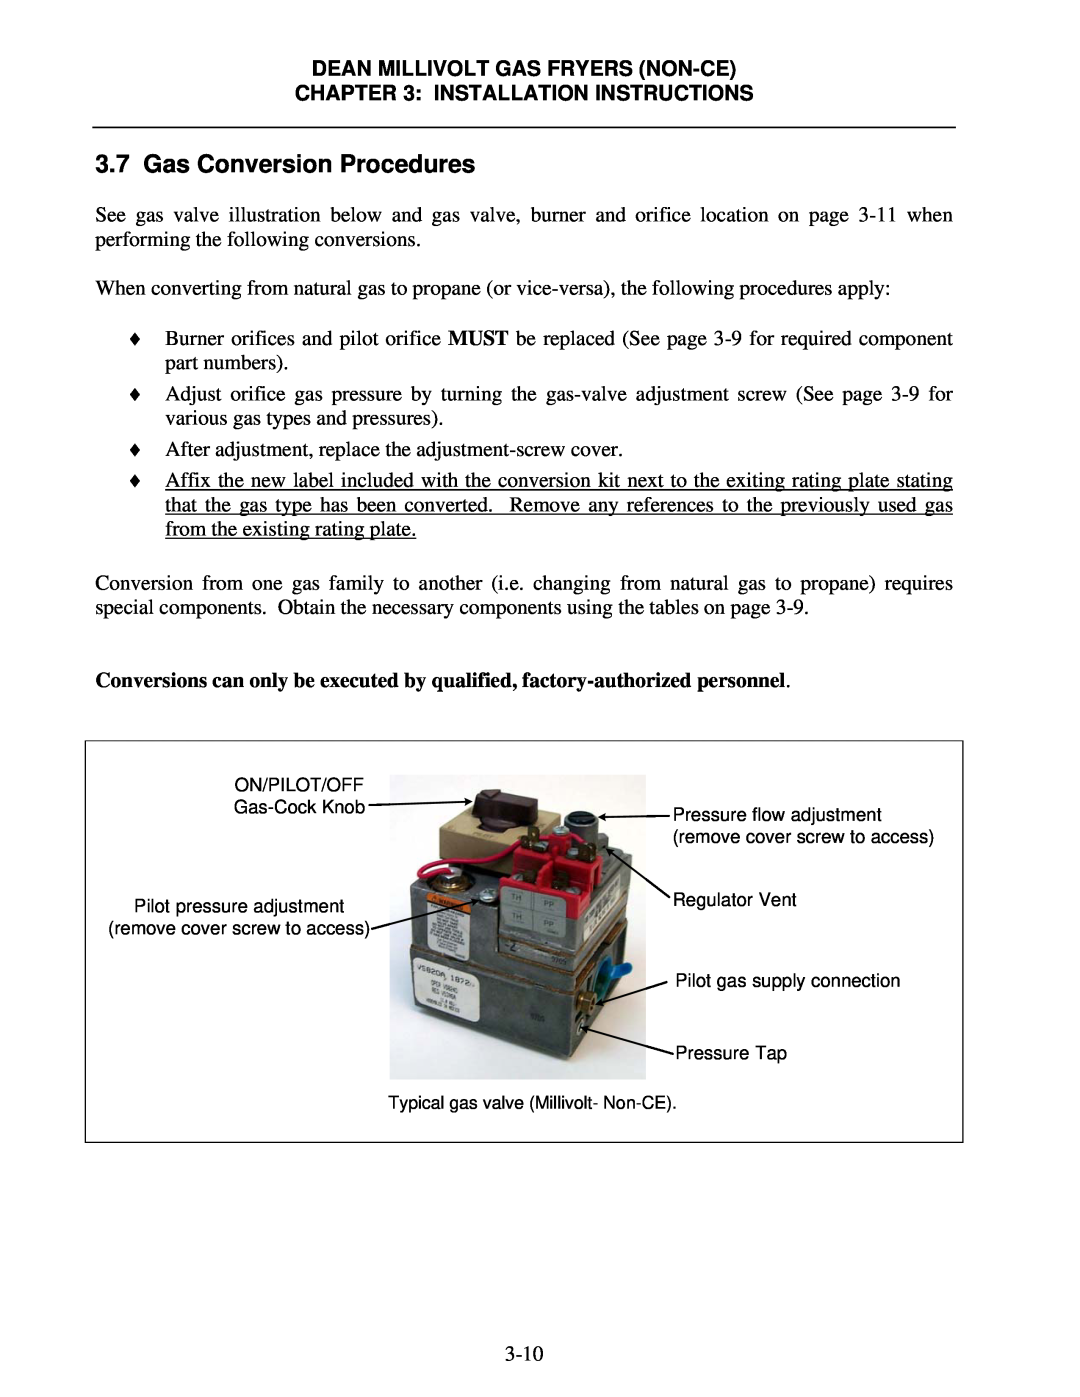 Frymaster SM35 operation manual Gas Conversion Procedures, Dean Millivolt Gas Fryers Non-Ce Installation Instructions 